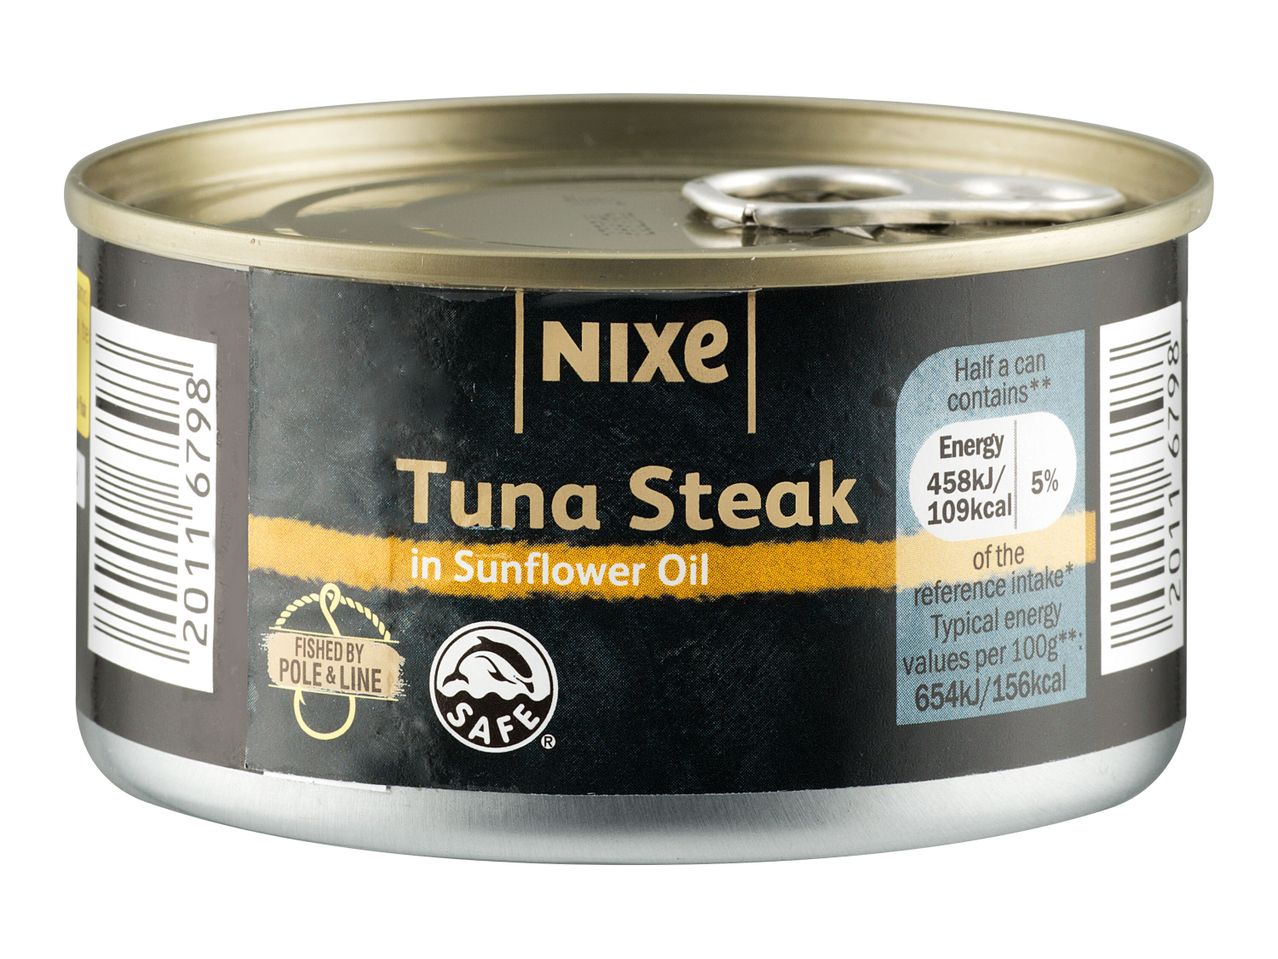 Go to full screen view: Nixe Tuna Steak in Sunflower Oil - Image 1